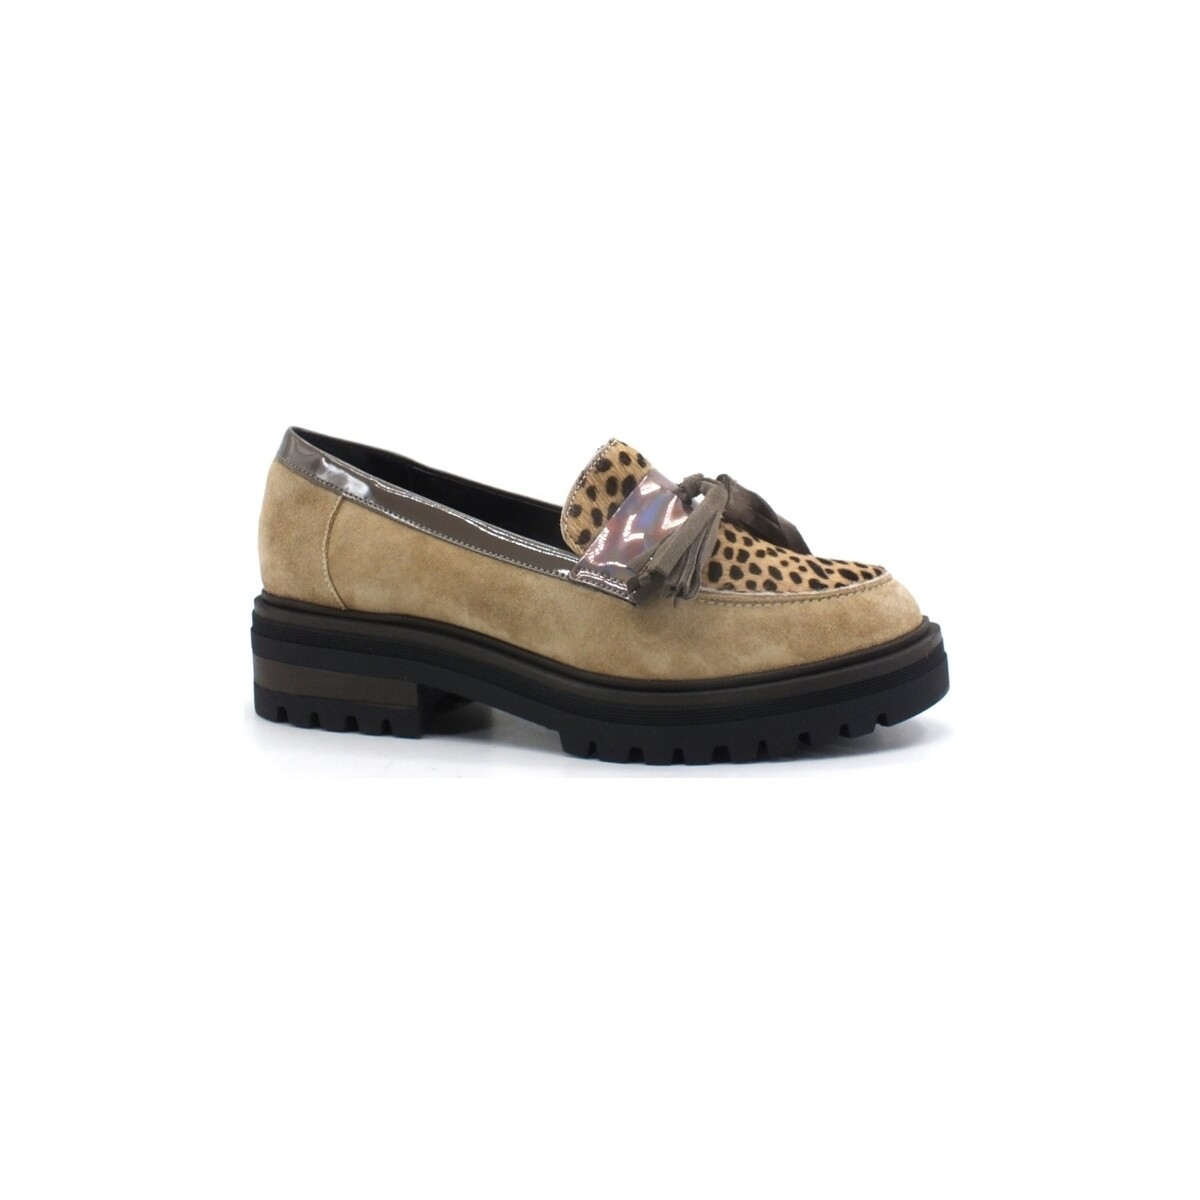 Chaussures Femme Bottes L4k3 LAKE Mocassino Leopard Beige E17-MOC Beige